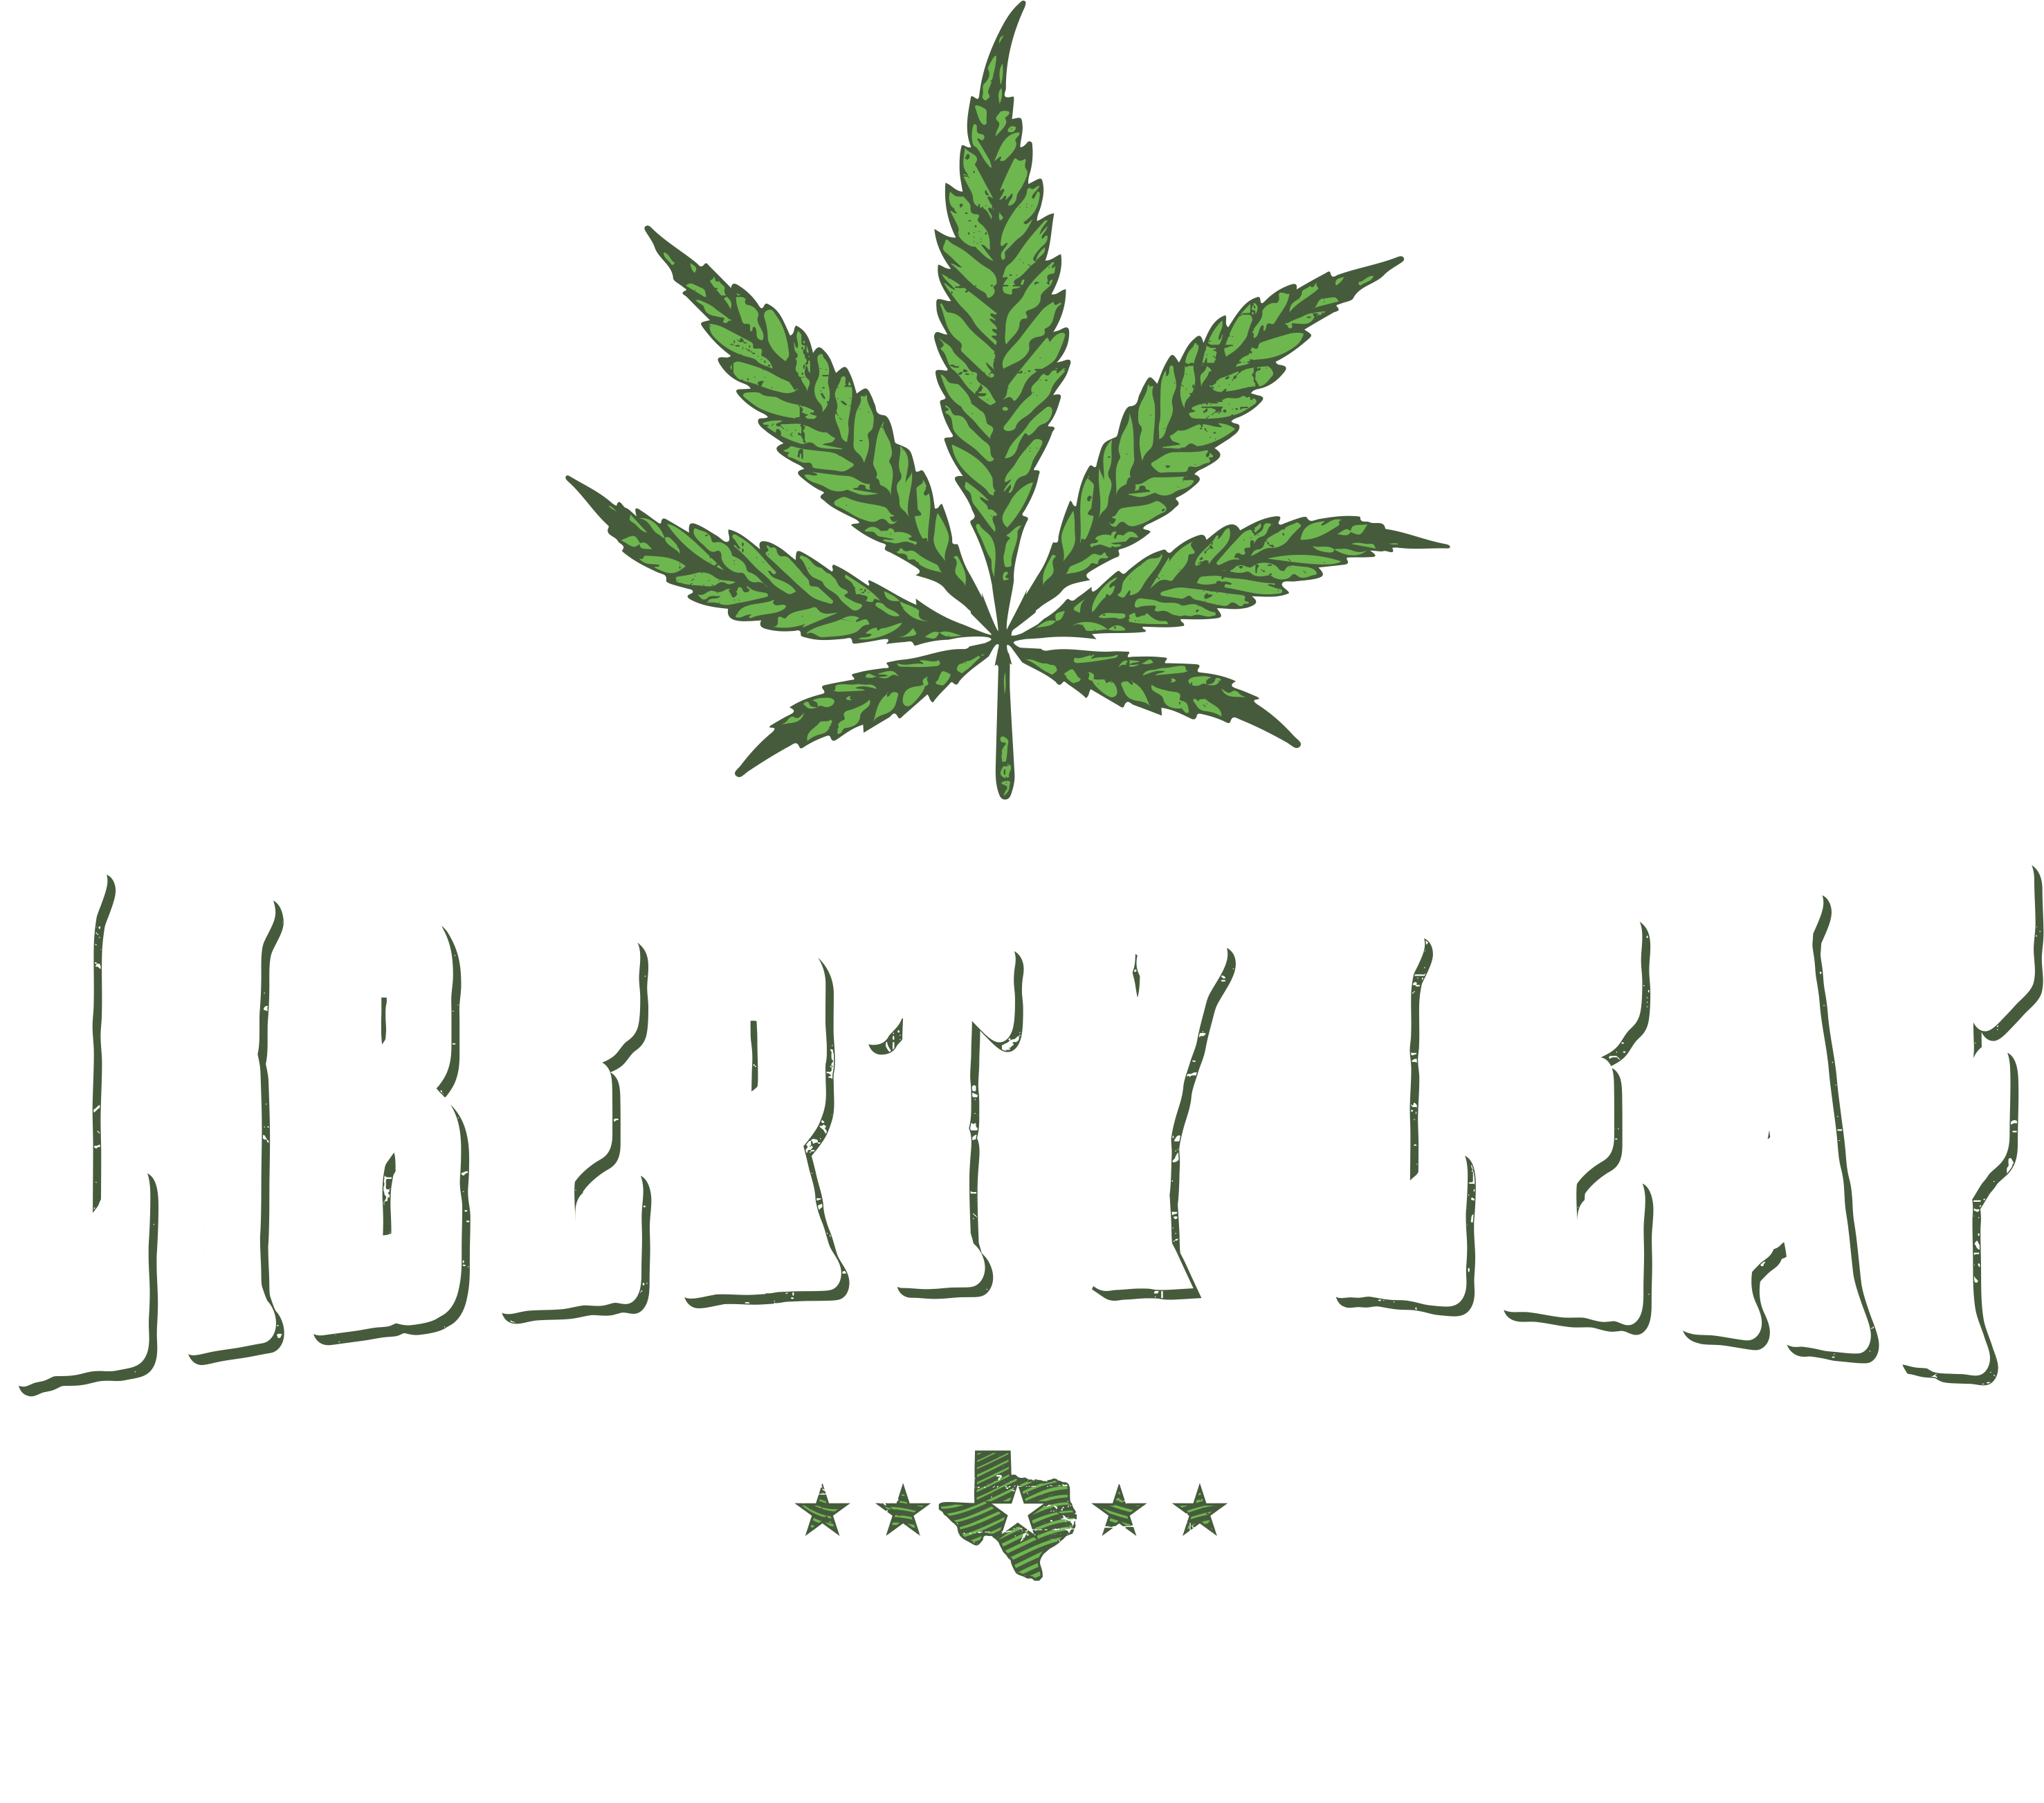 Liberty Leaf Canna Co.